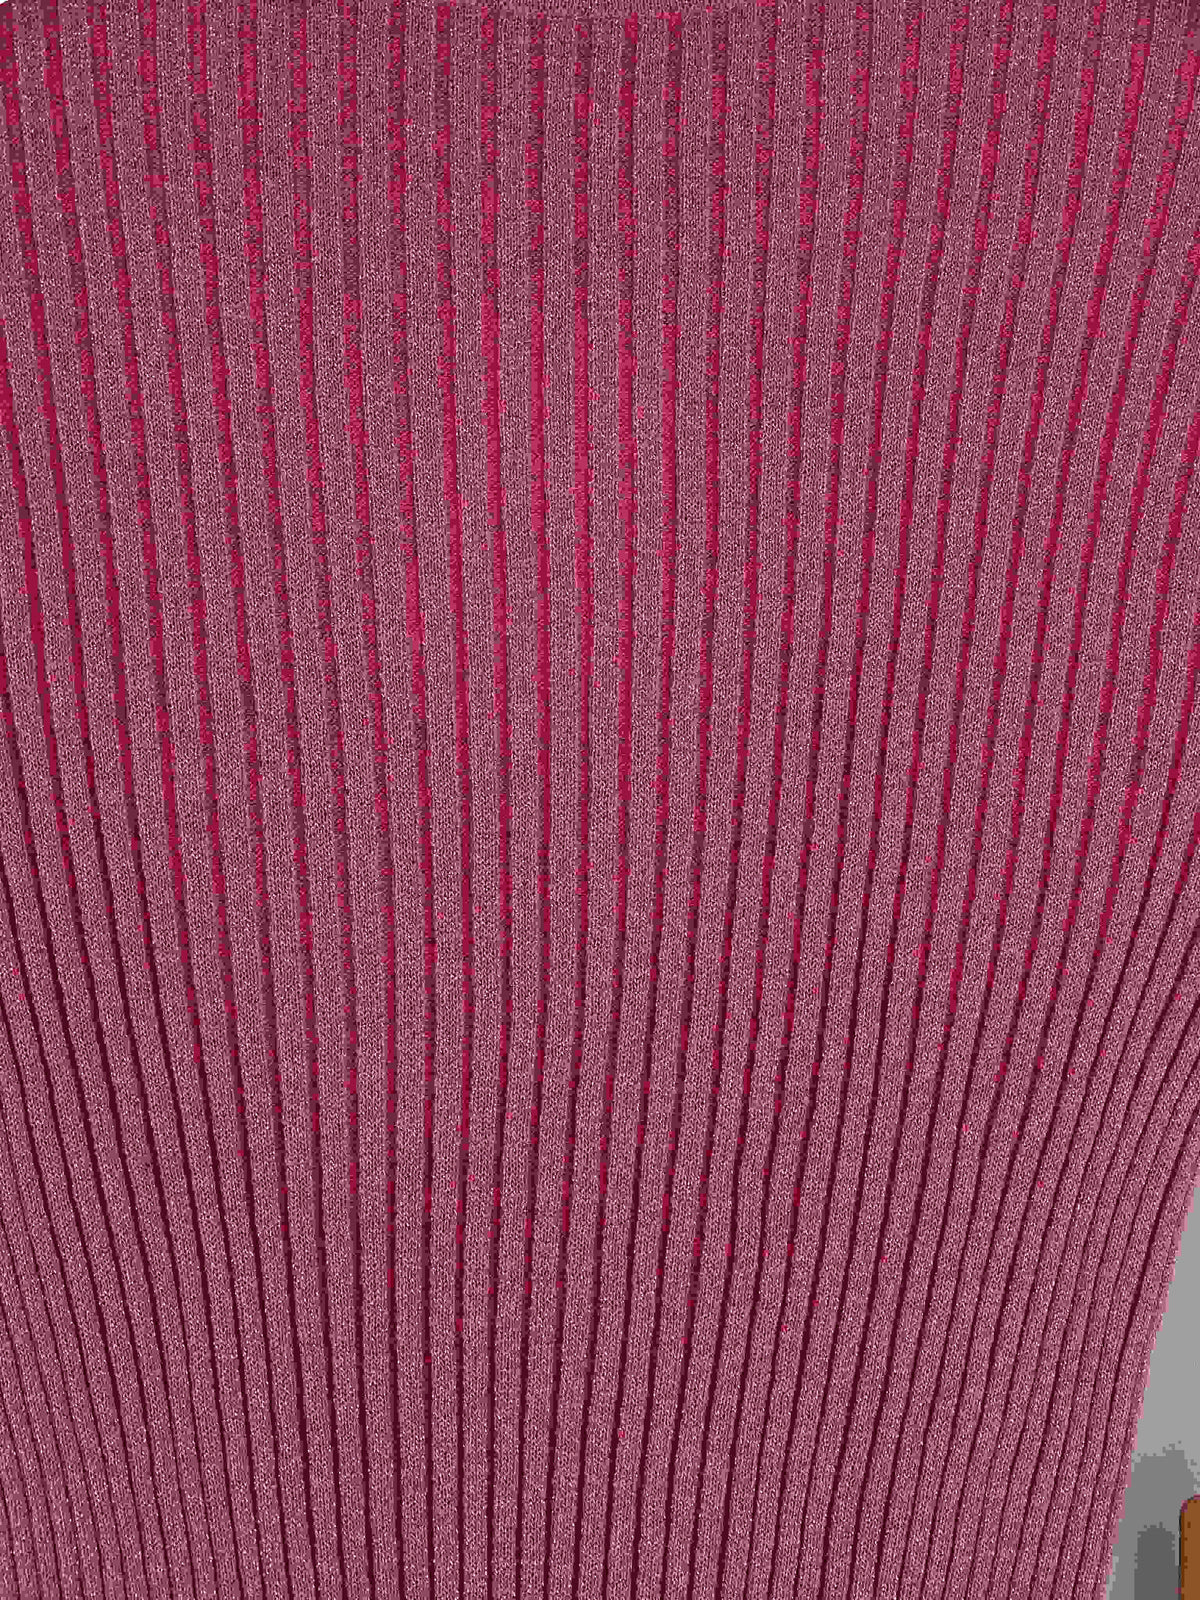 Gorman Pink Sparkly Knit Turtleneck 10